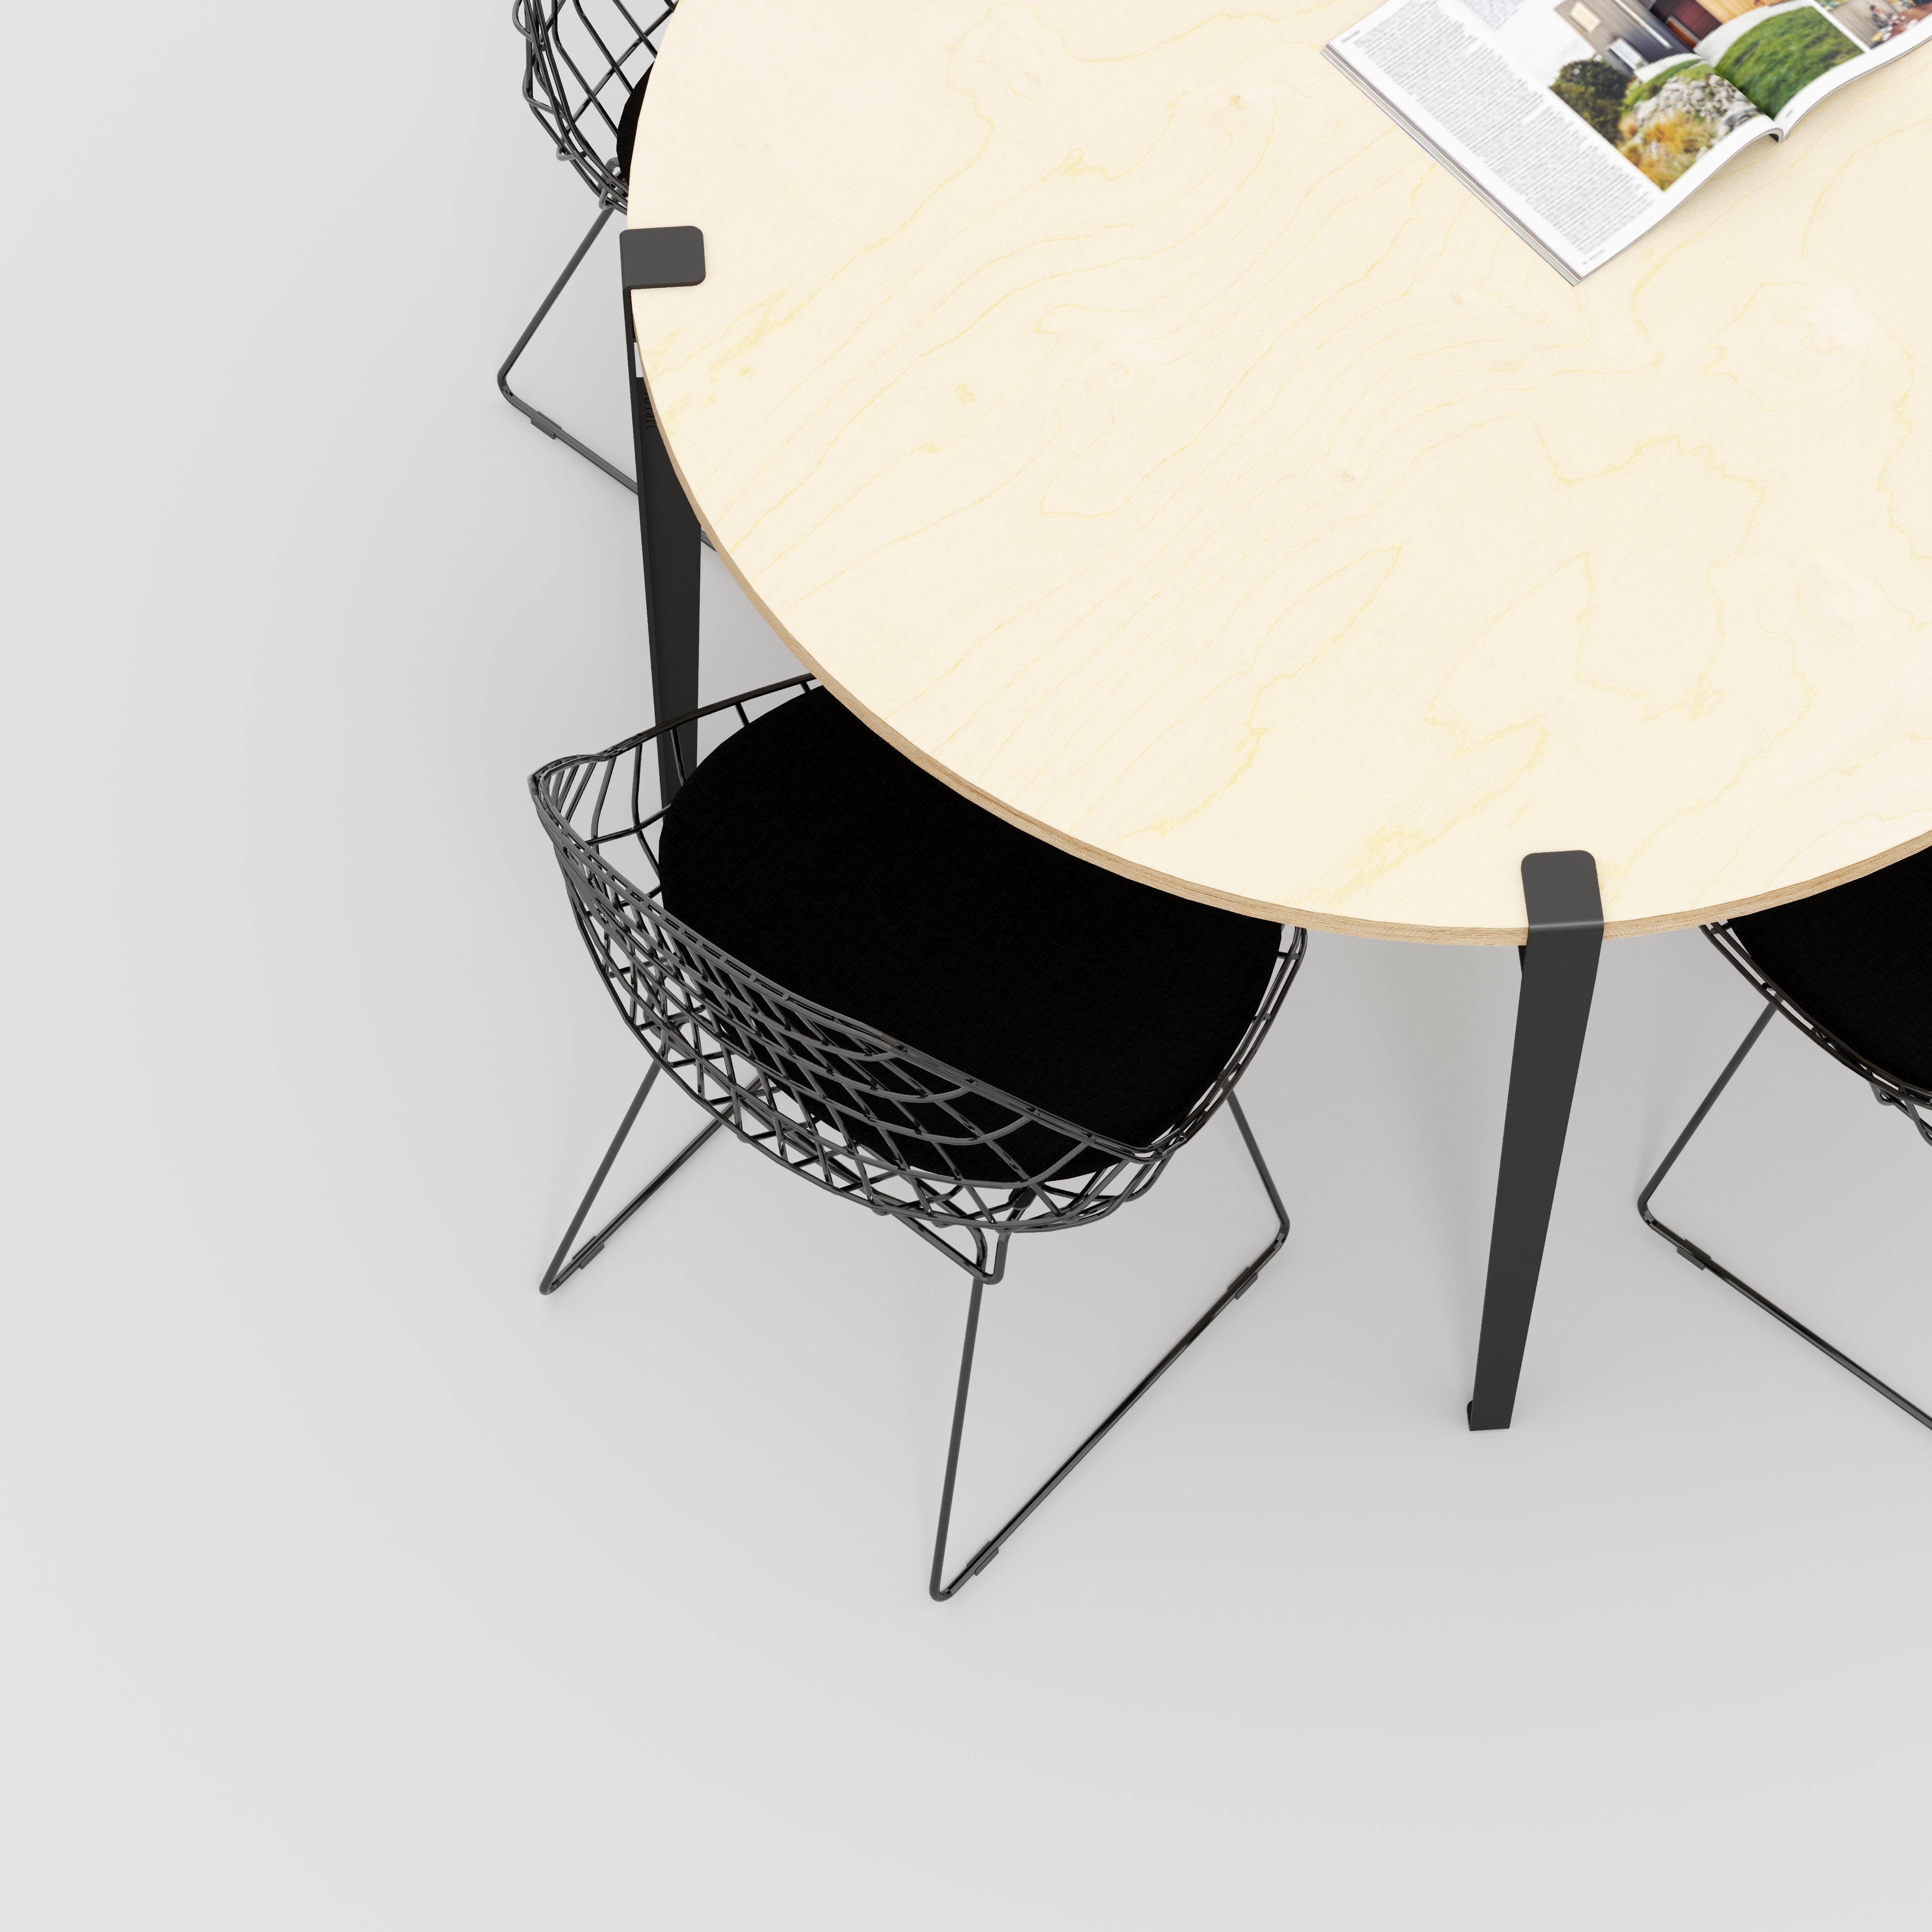 Custom Plywood Round Table with Tiptoe Legs